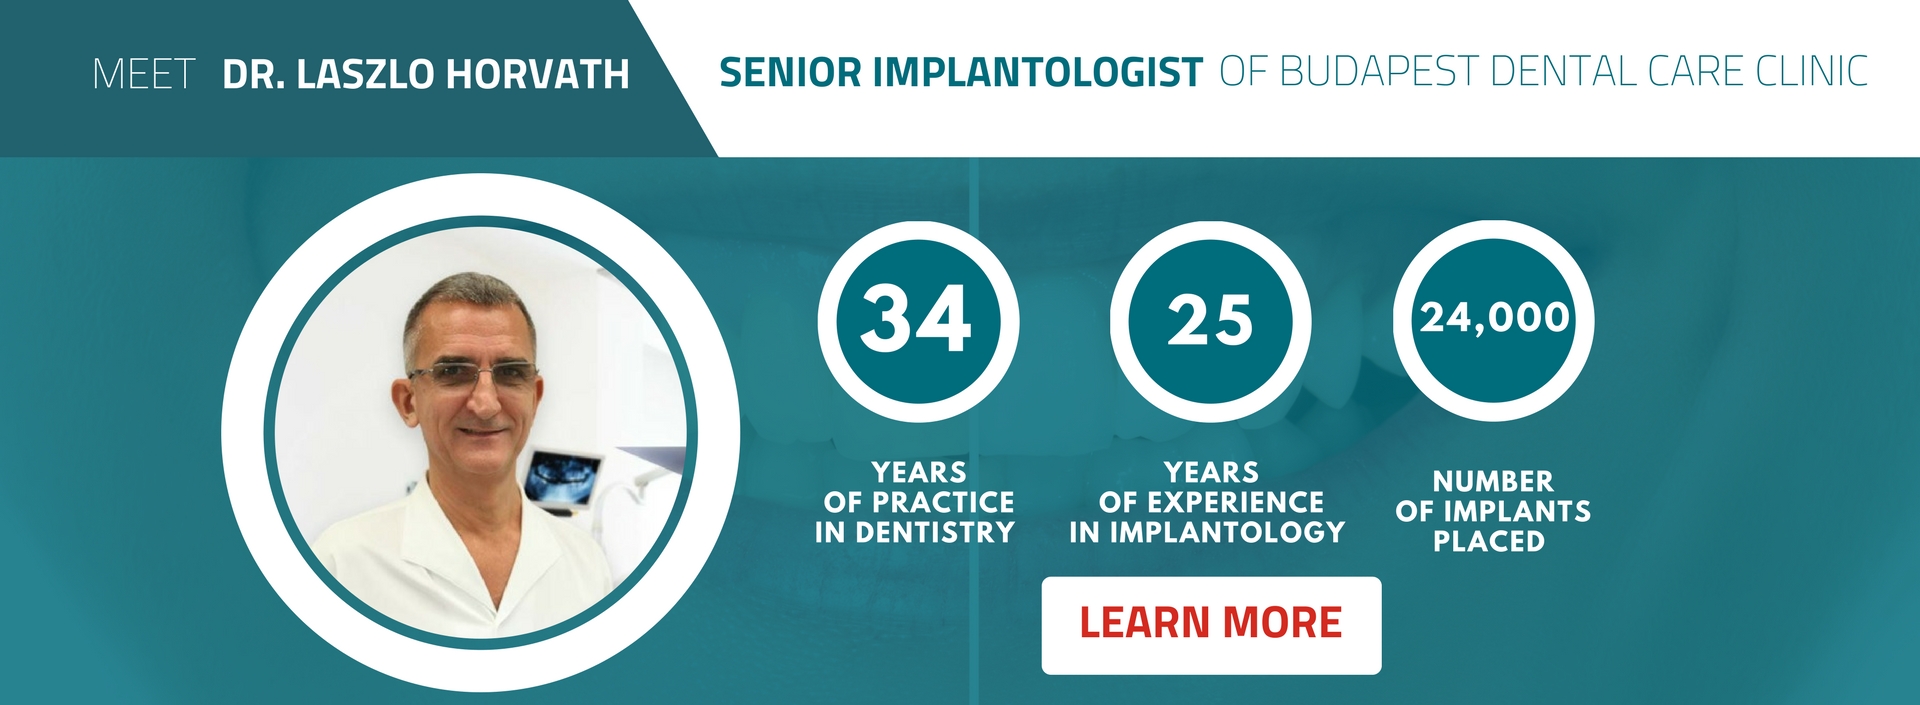 Senior Implantologist of Budapest Dental Care Clinic